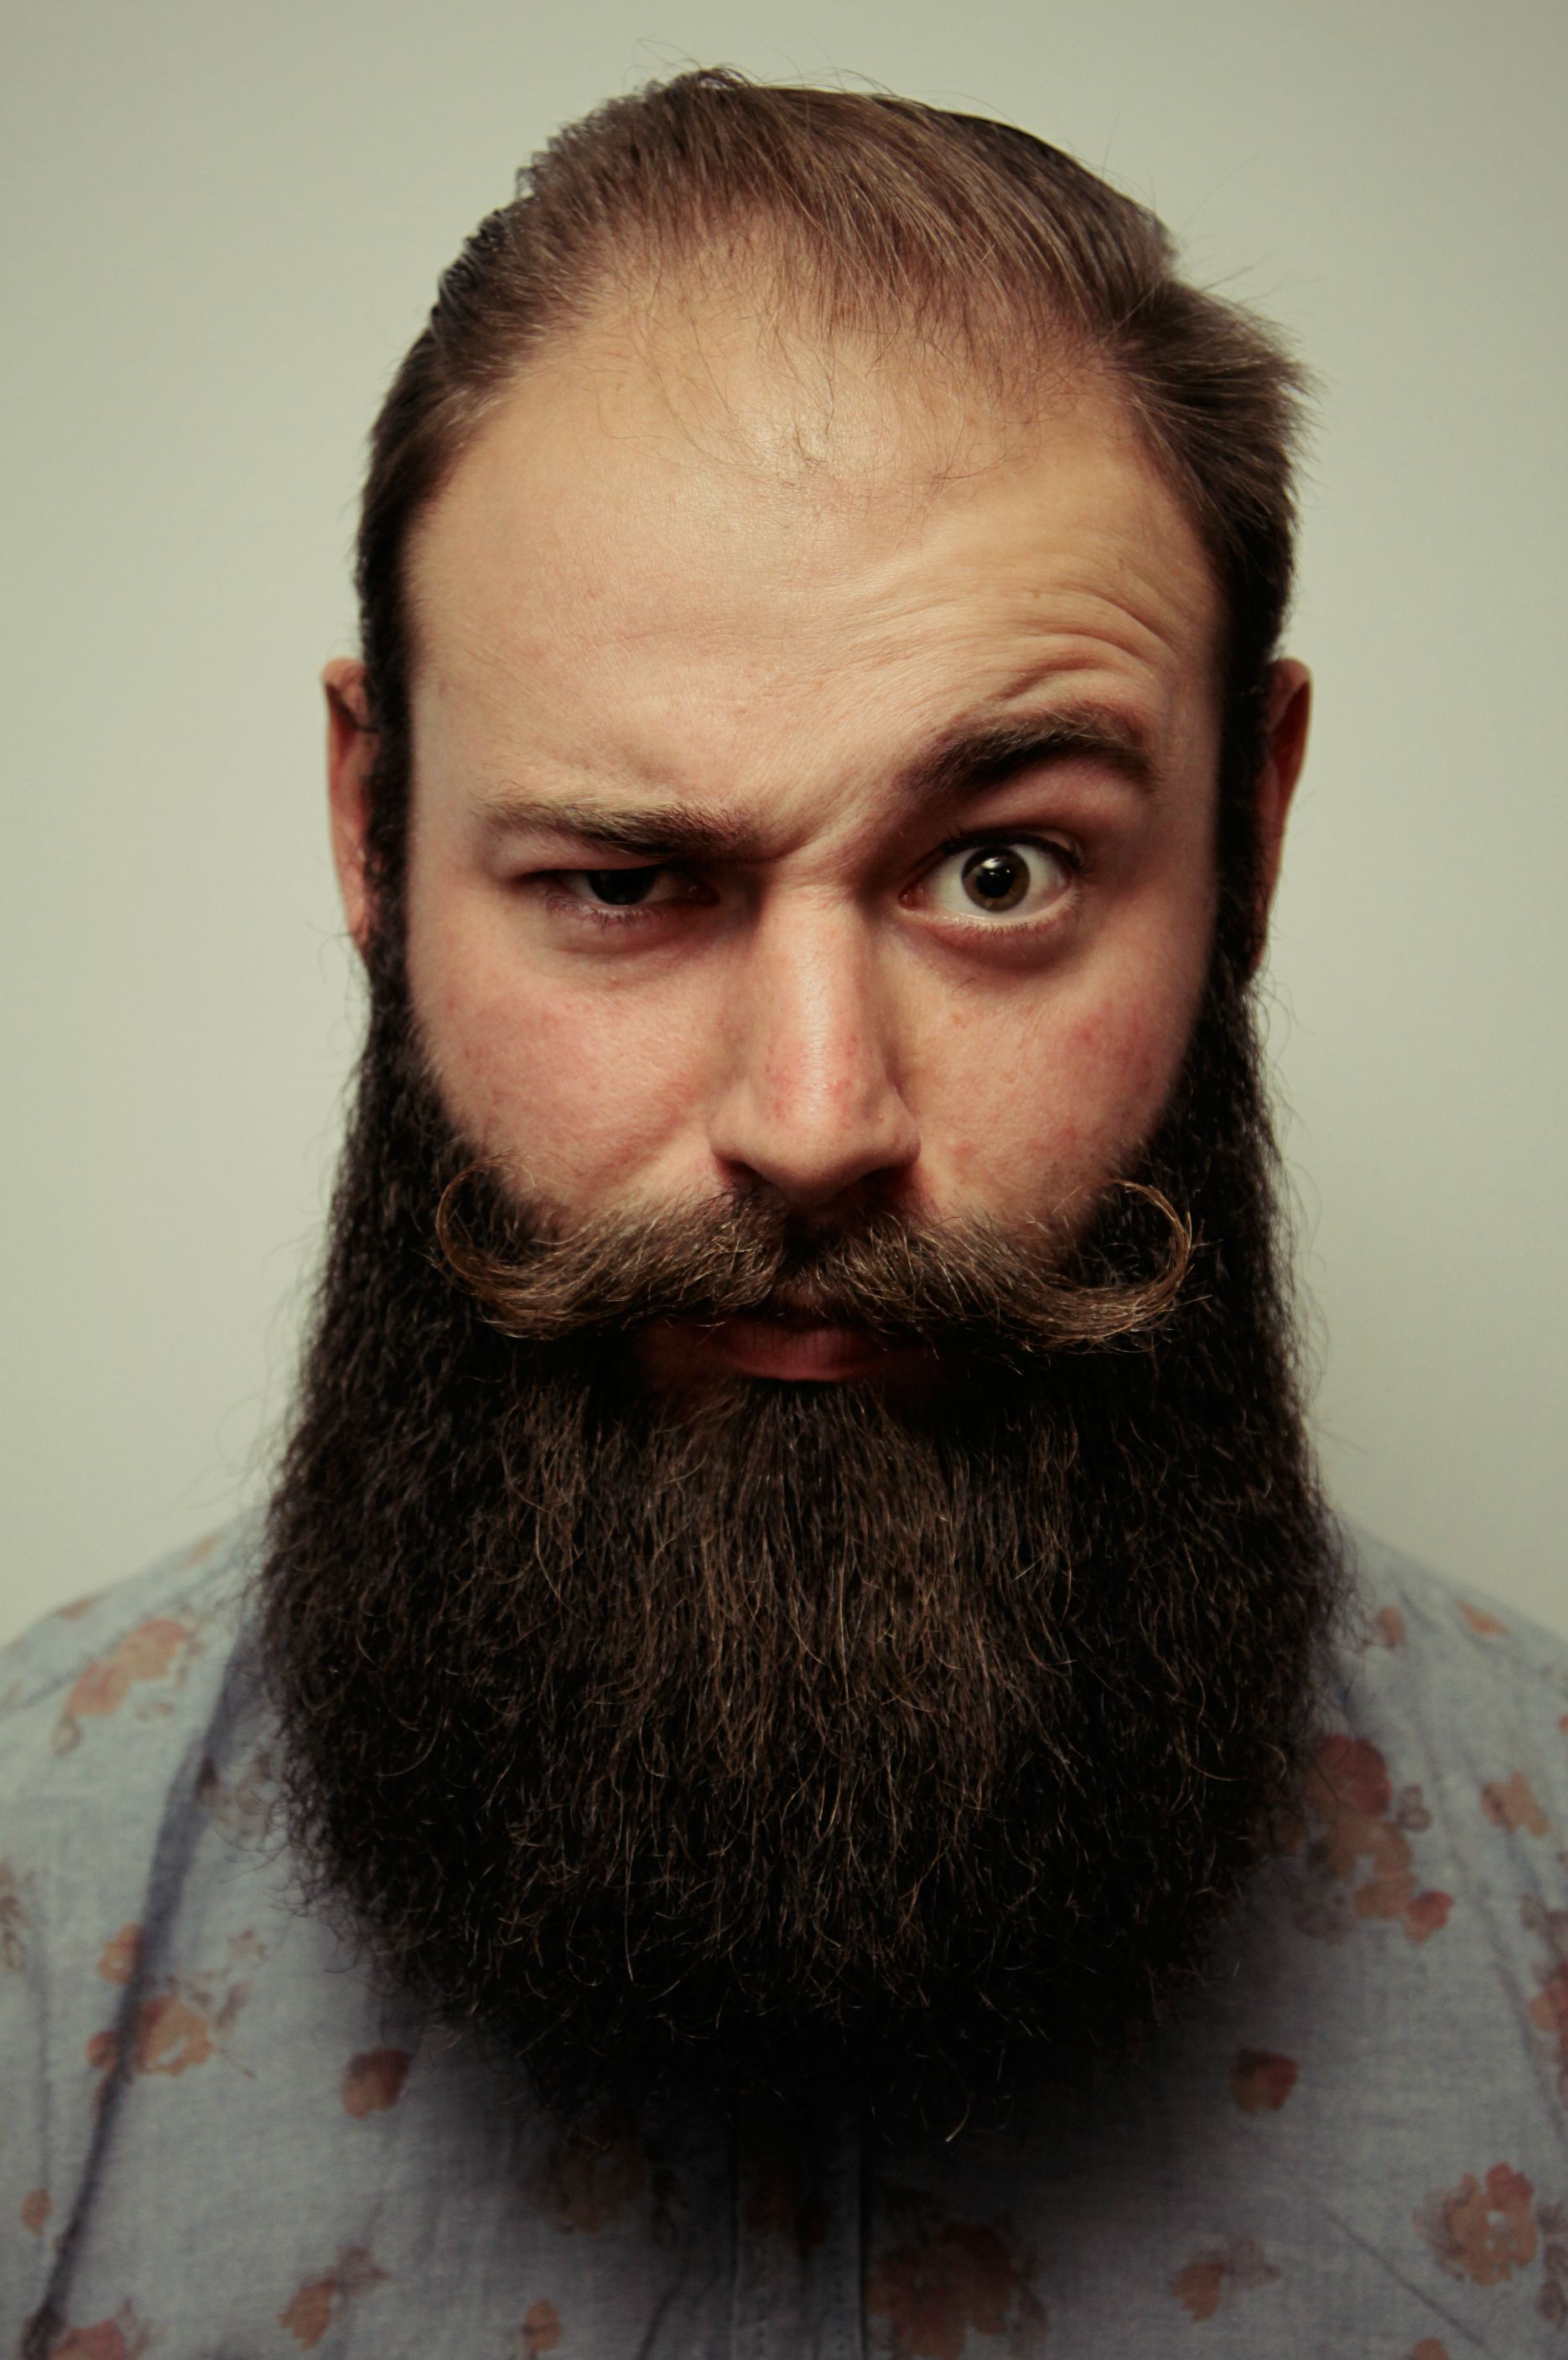 bigote y fondo de pantalla de barba,barba,cabello,bigote,frente,ceja